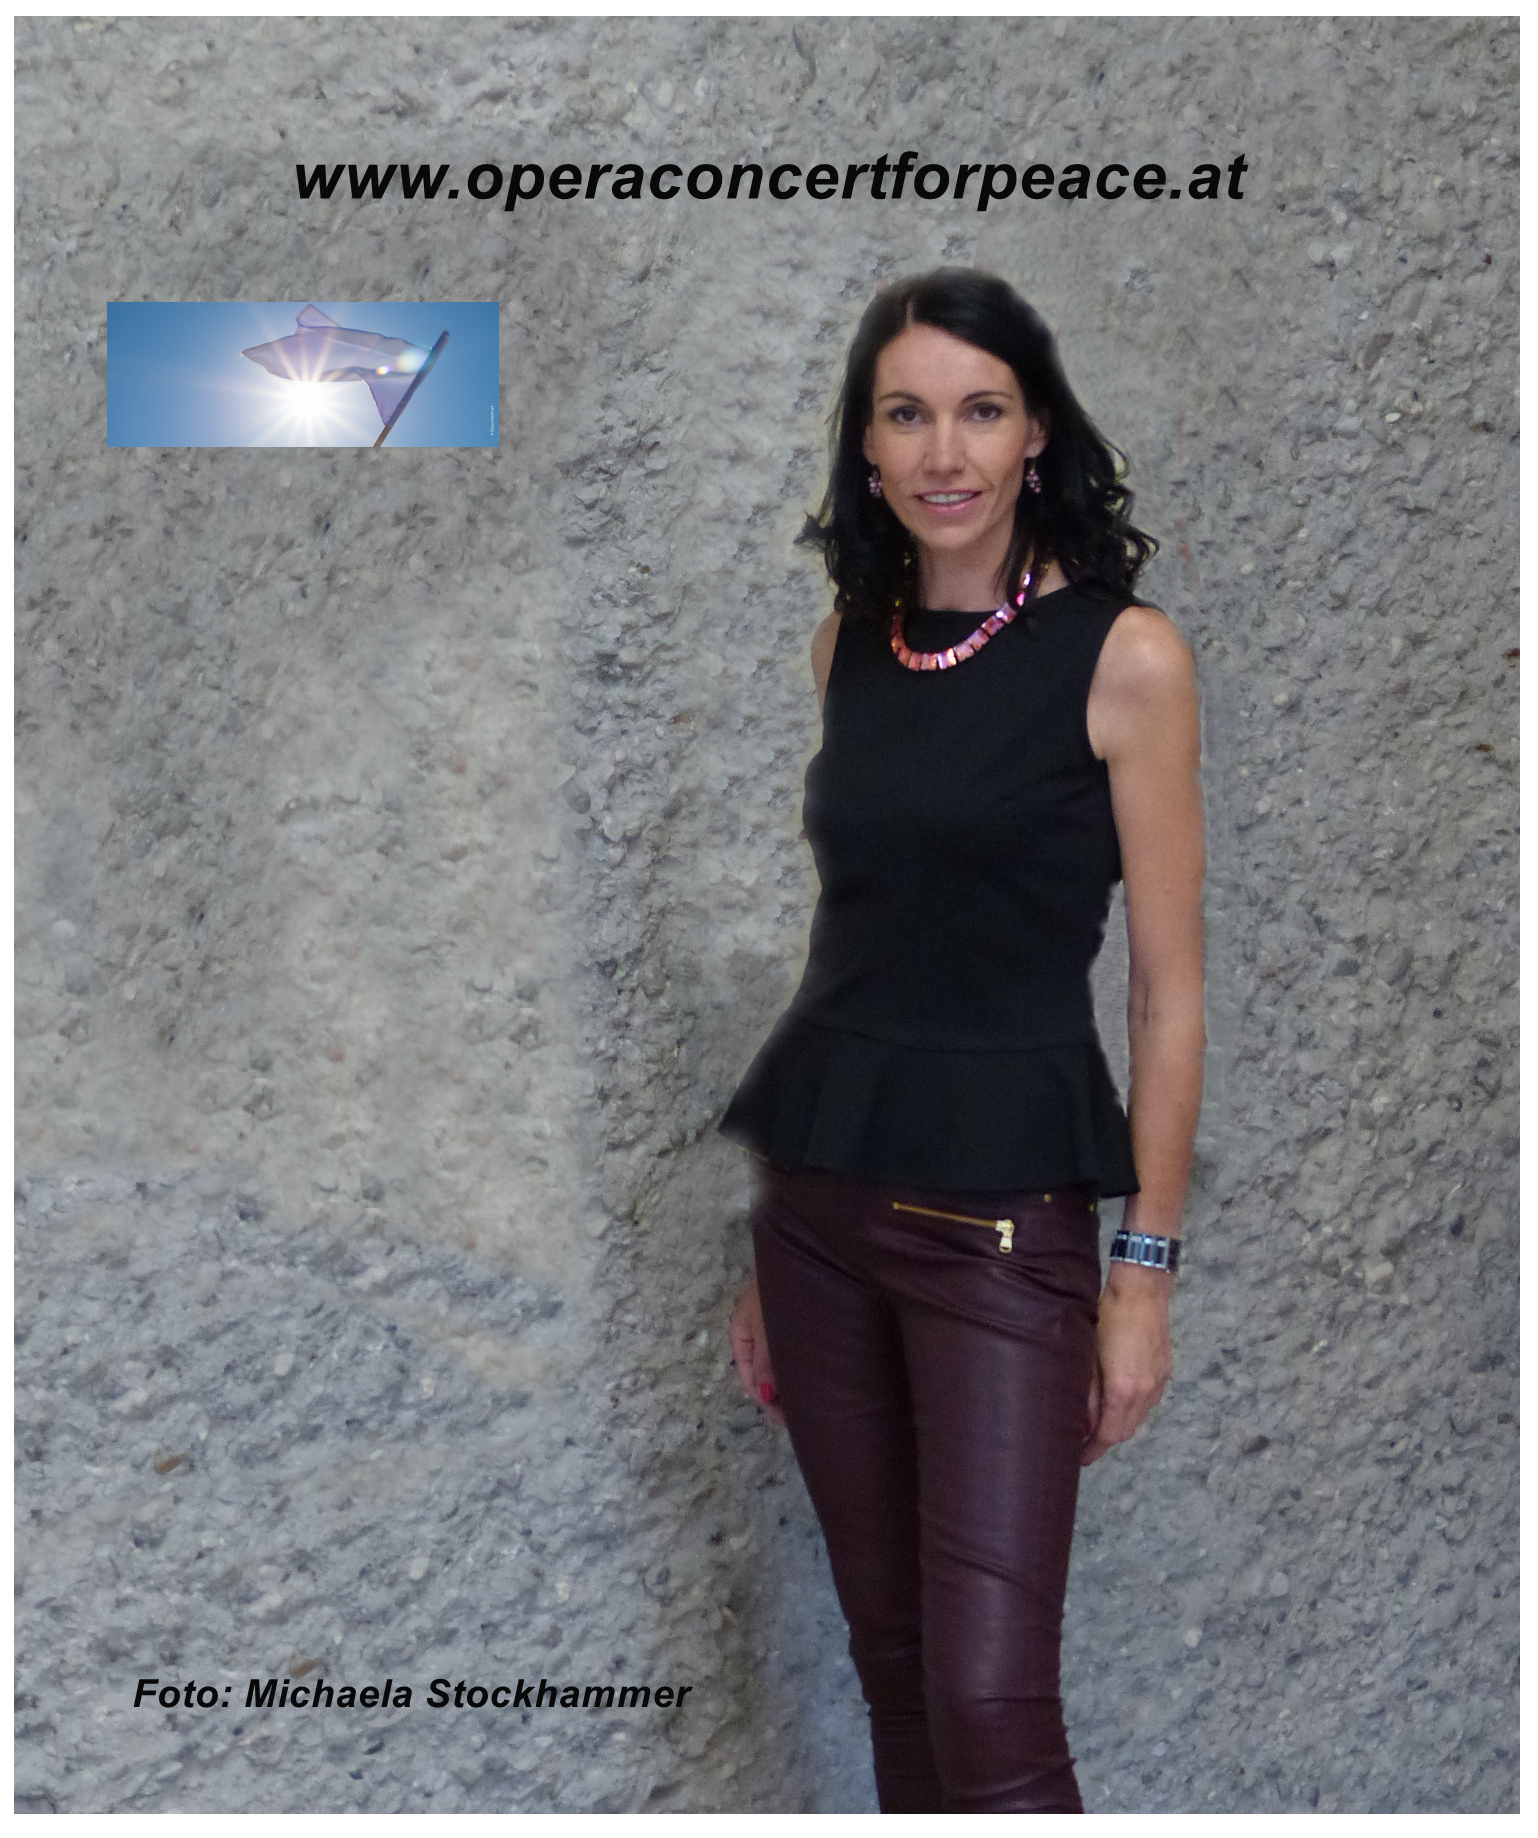 Salzburgs Kunstszene für Opera Concert for Peace